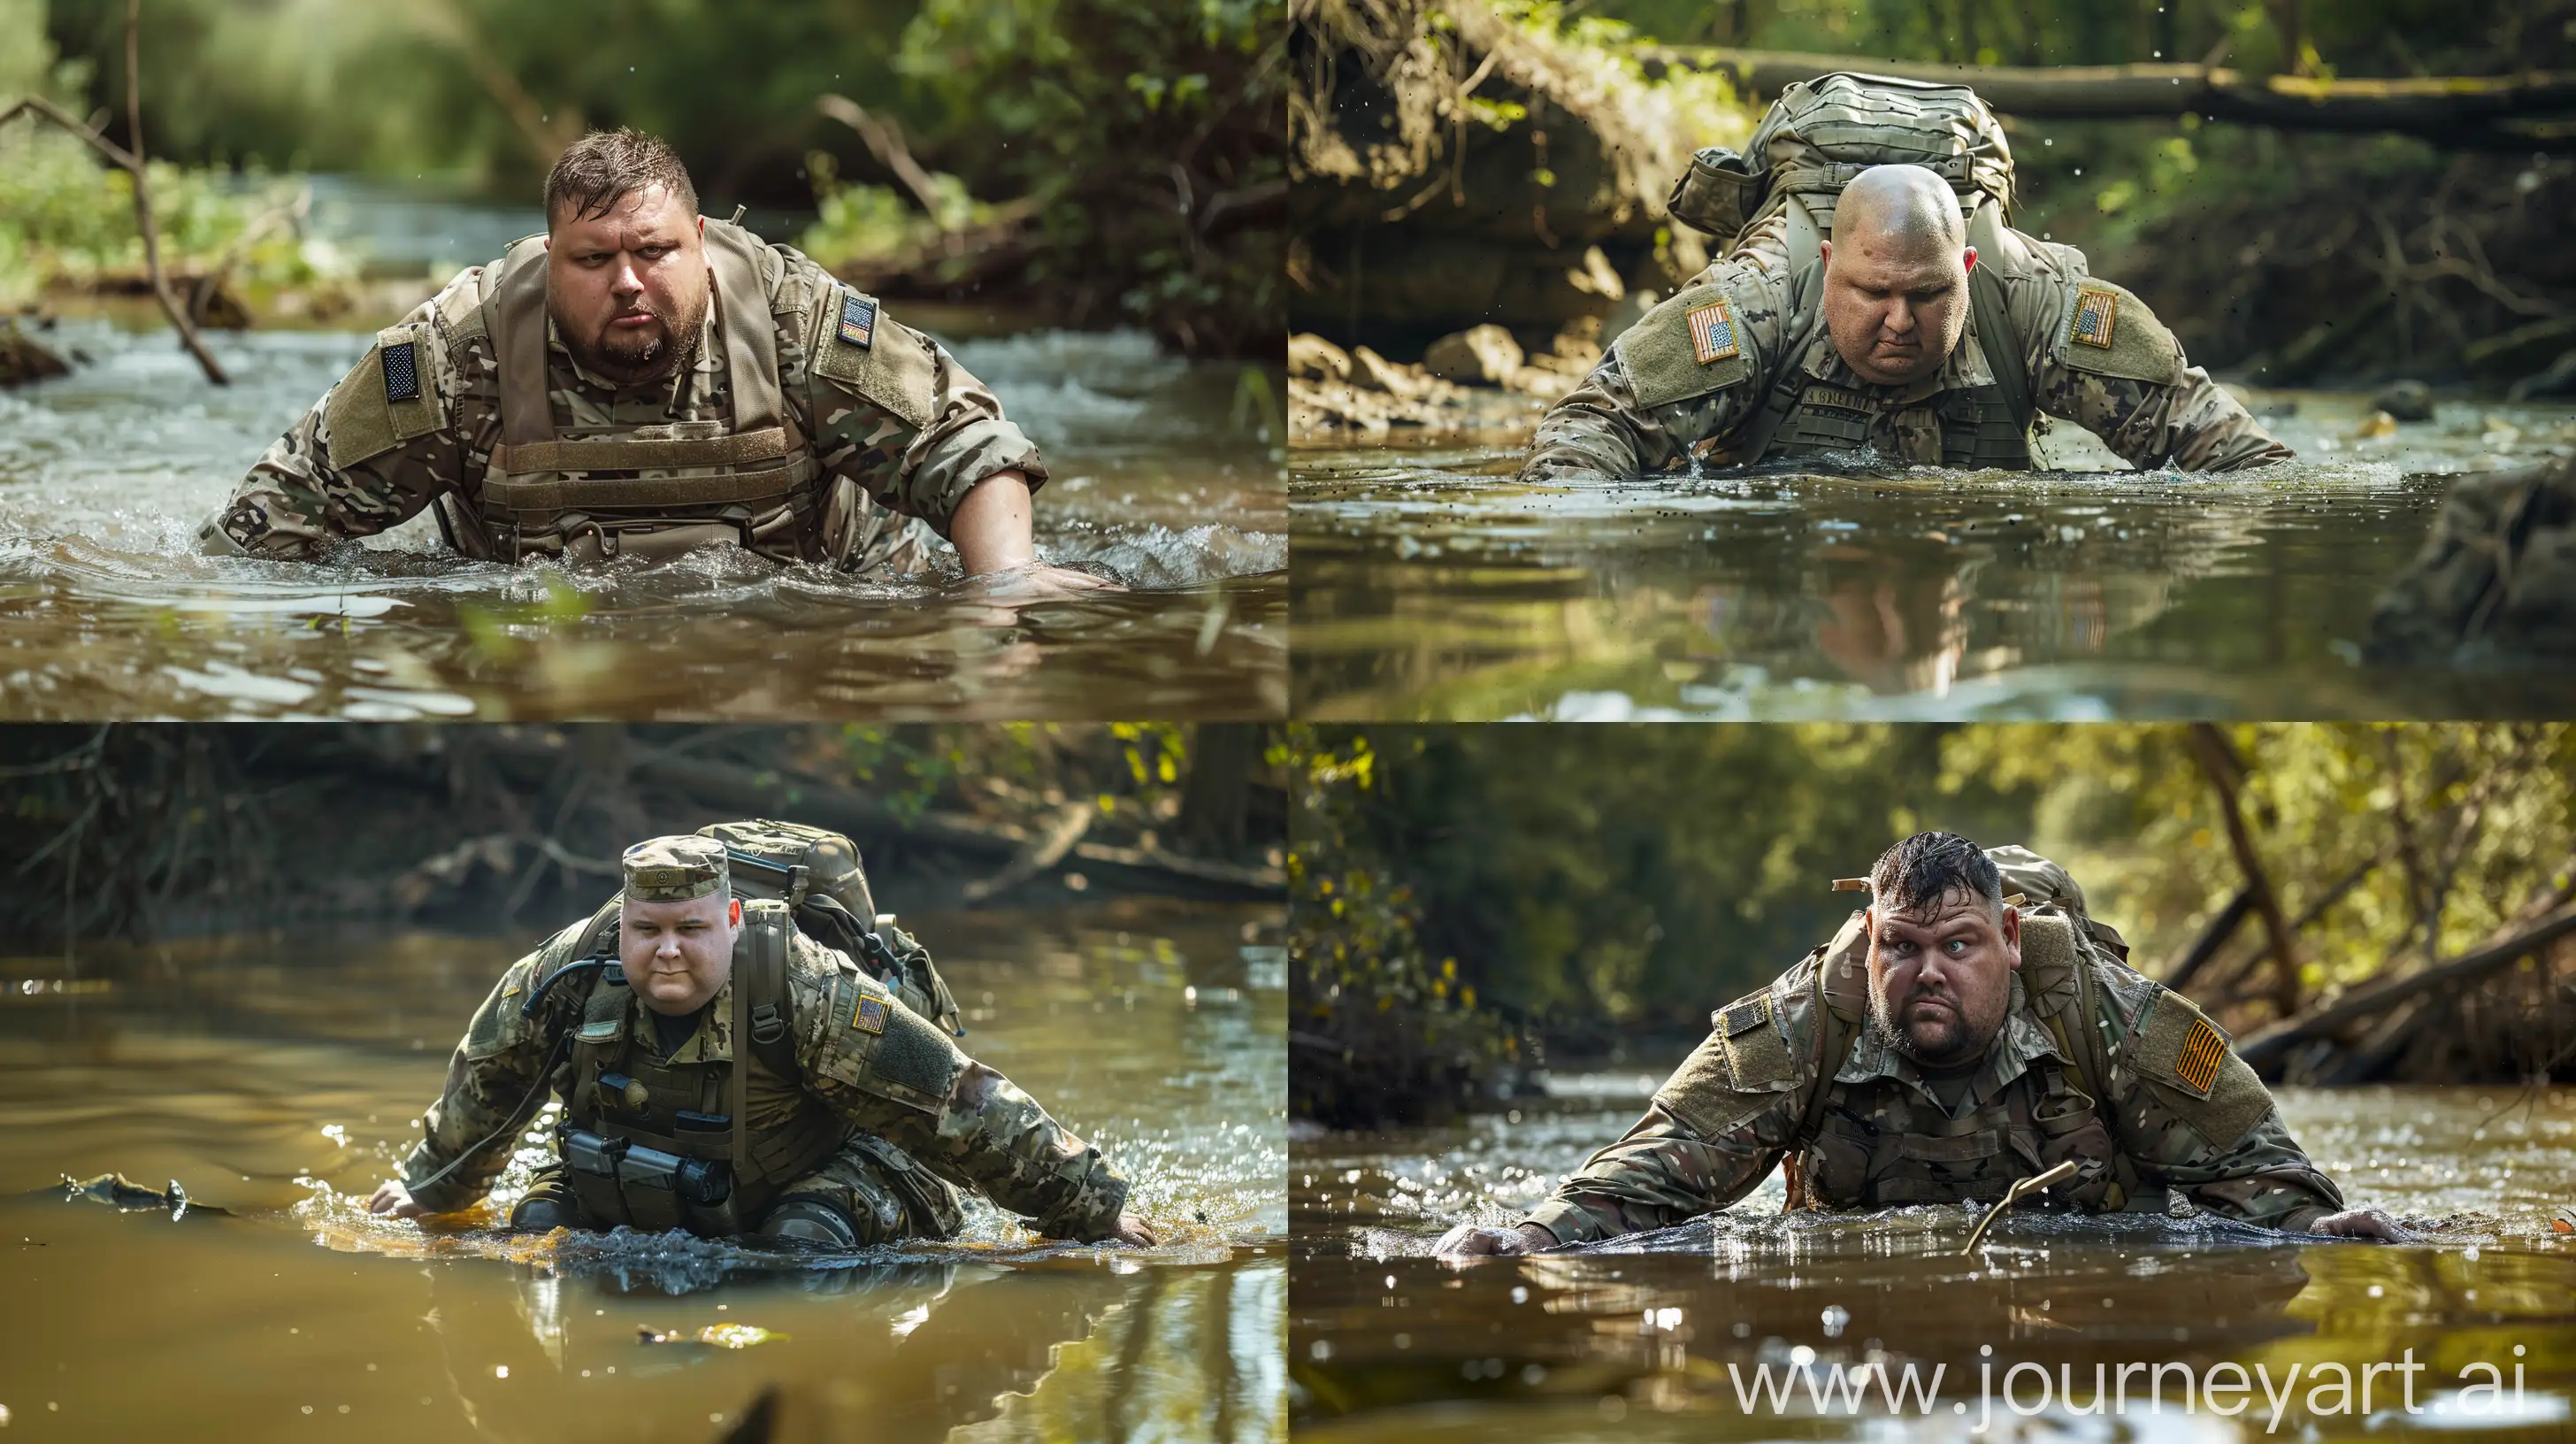 Elderly-Soldier-Crawling-in-River-in-Full-Combat-Infantry-Gear